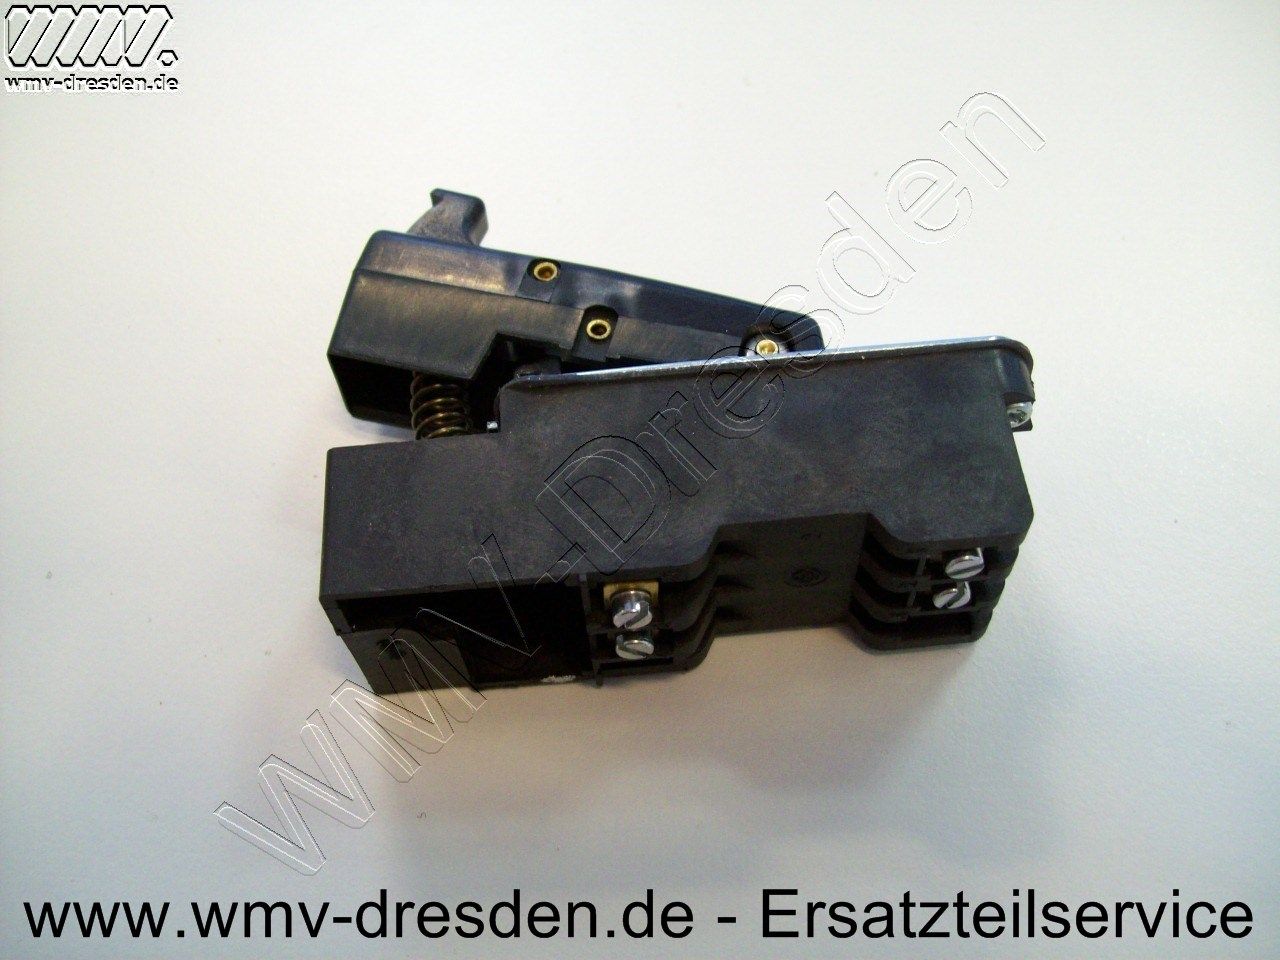 Artikel 1607200078-B17 Hersteller: Bosch-Skil-Dremel 